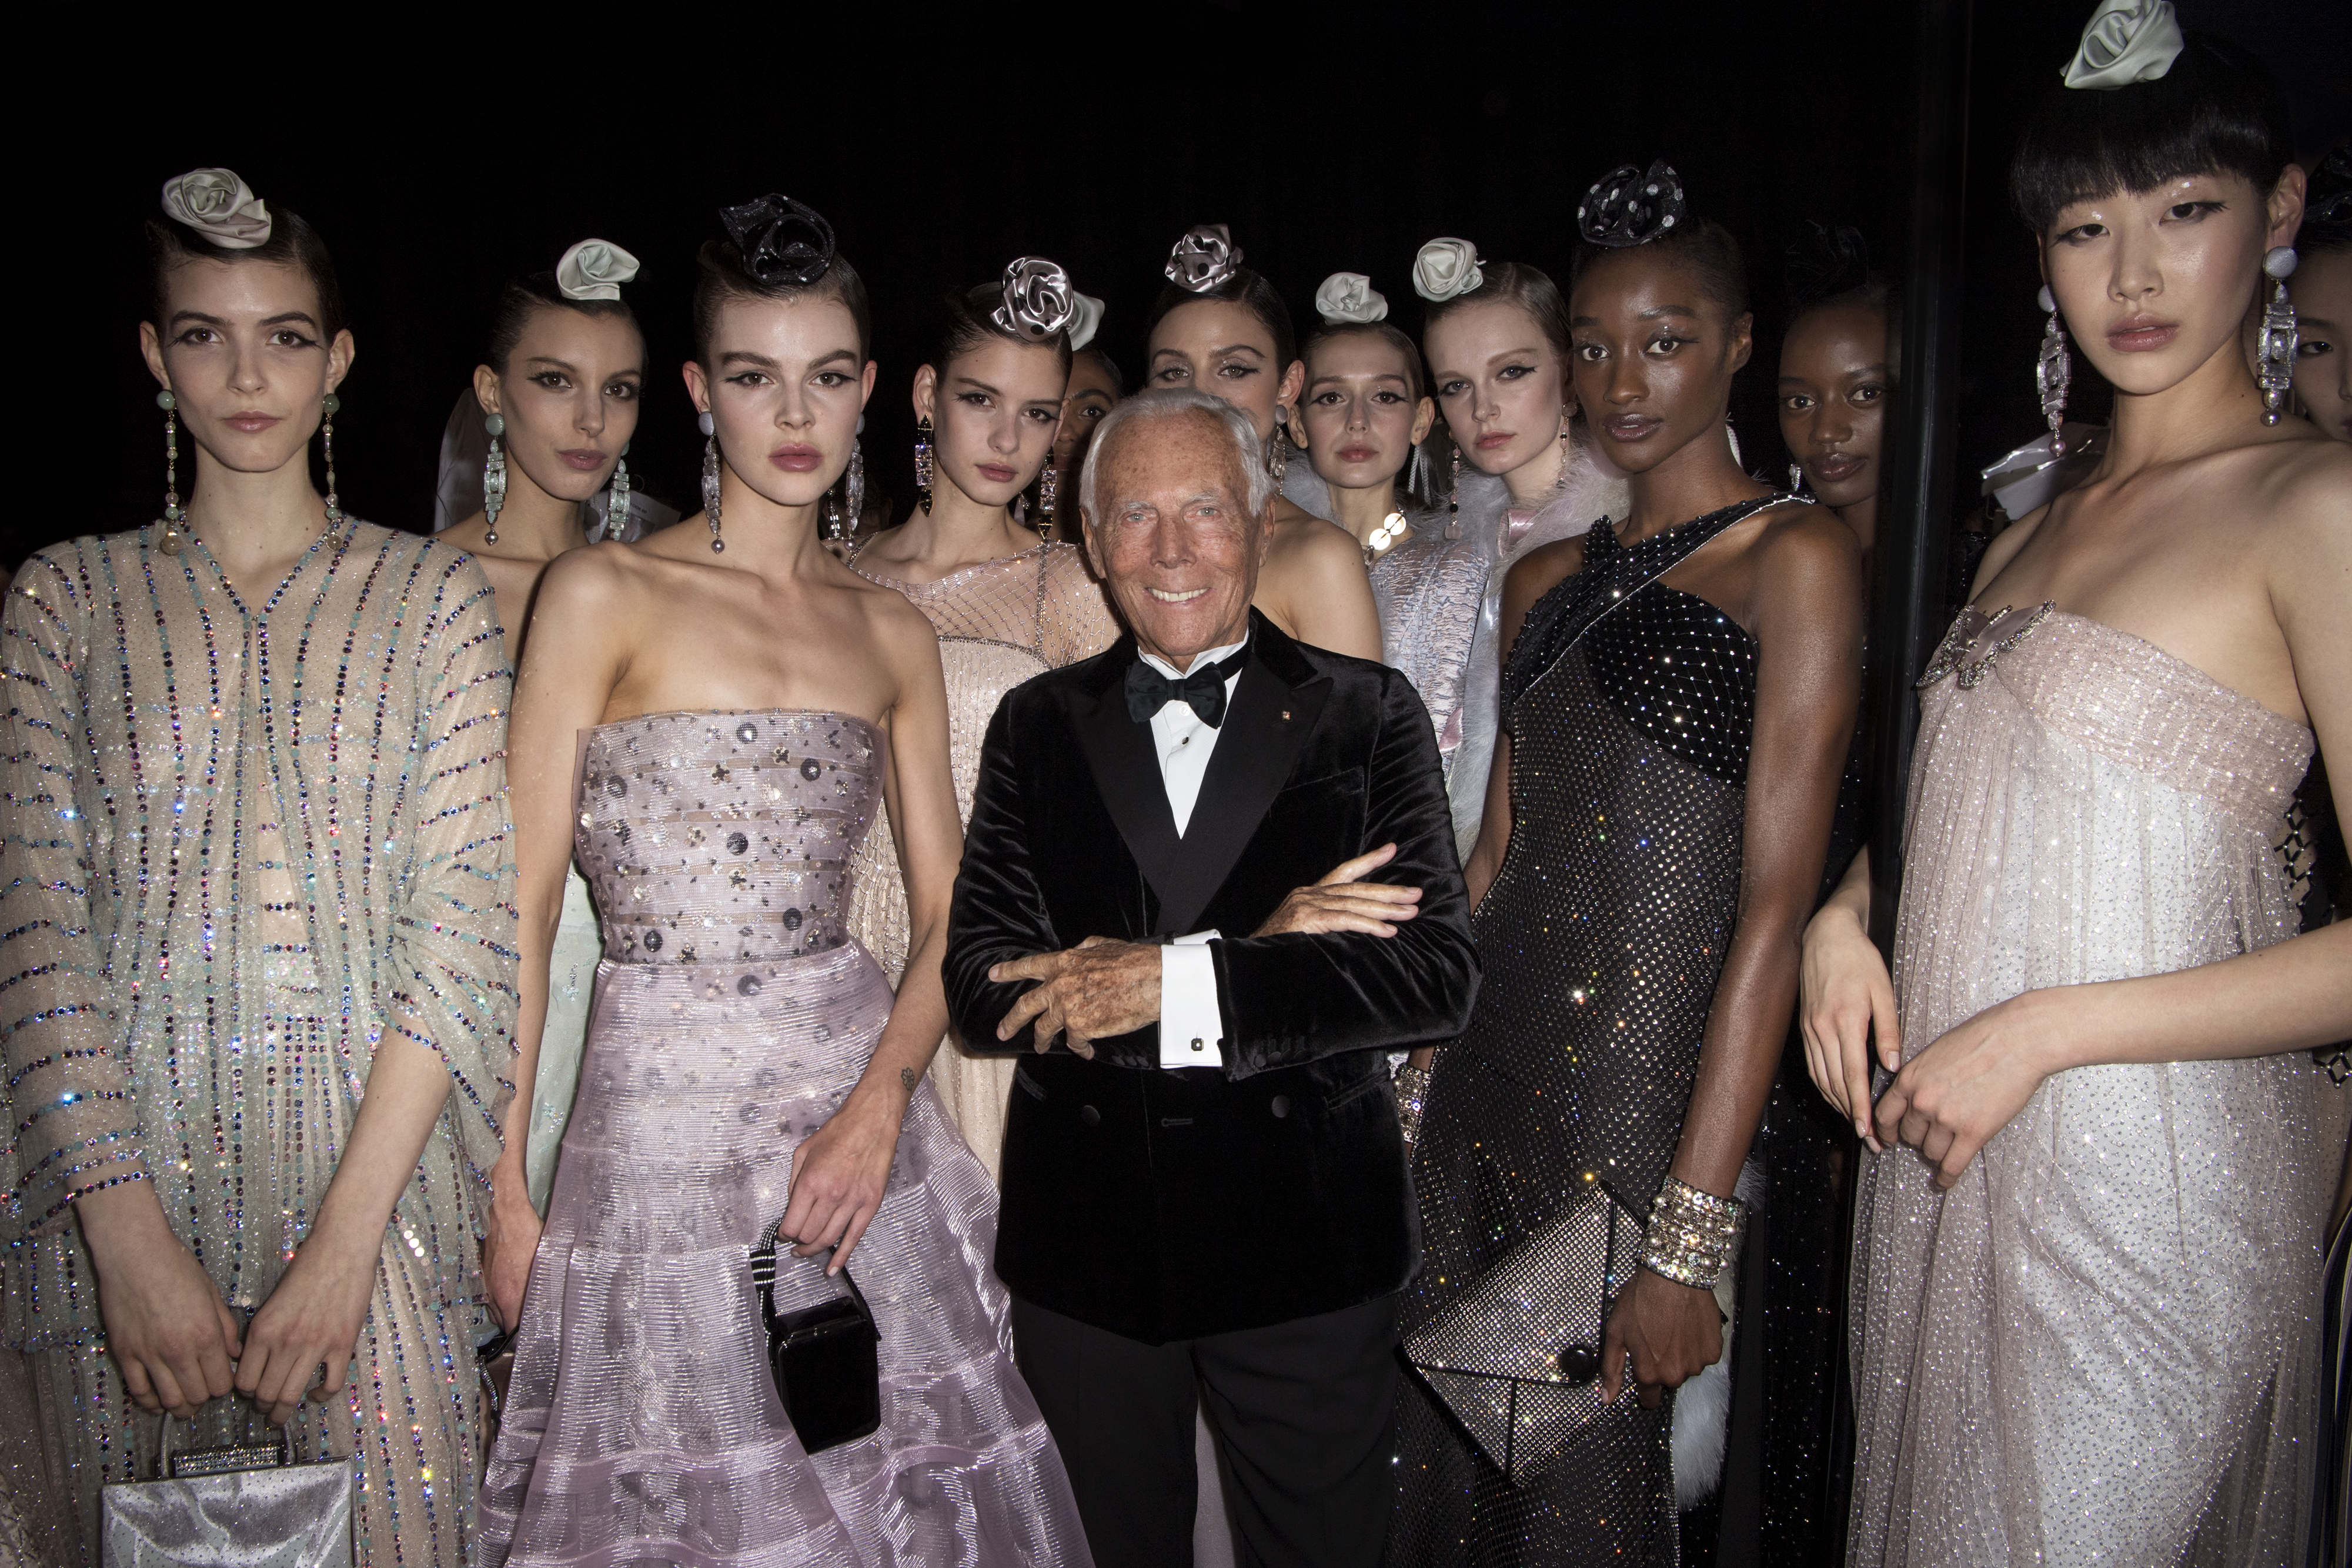 Giorgio Armani with models - photo by Stefano Guindani